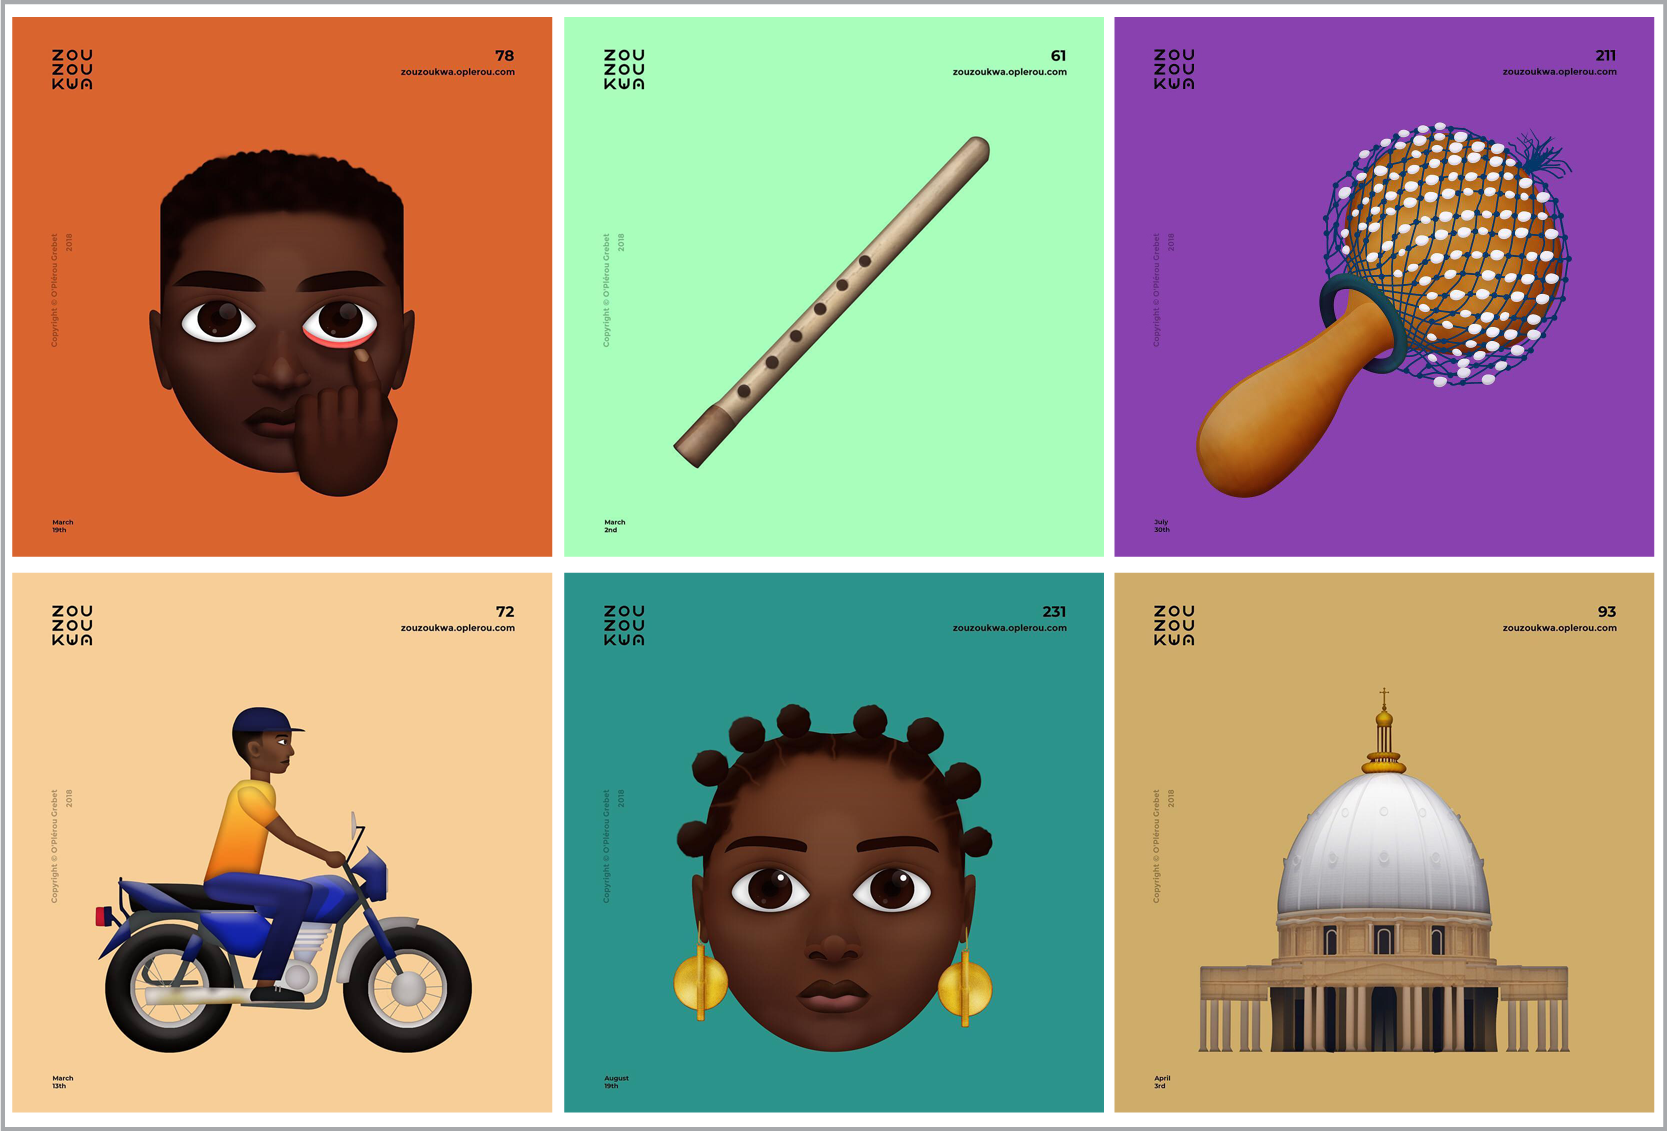 Emojis depicting West African culture